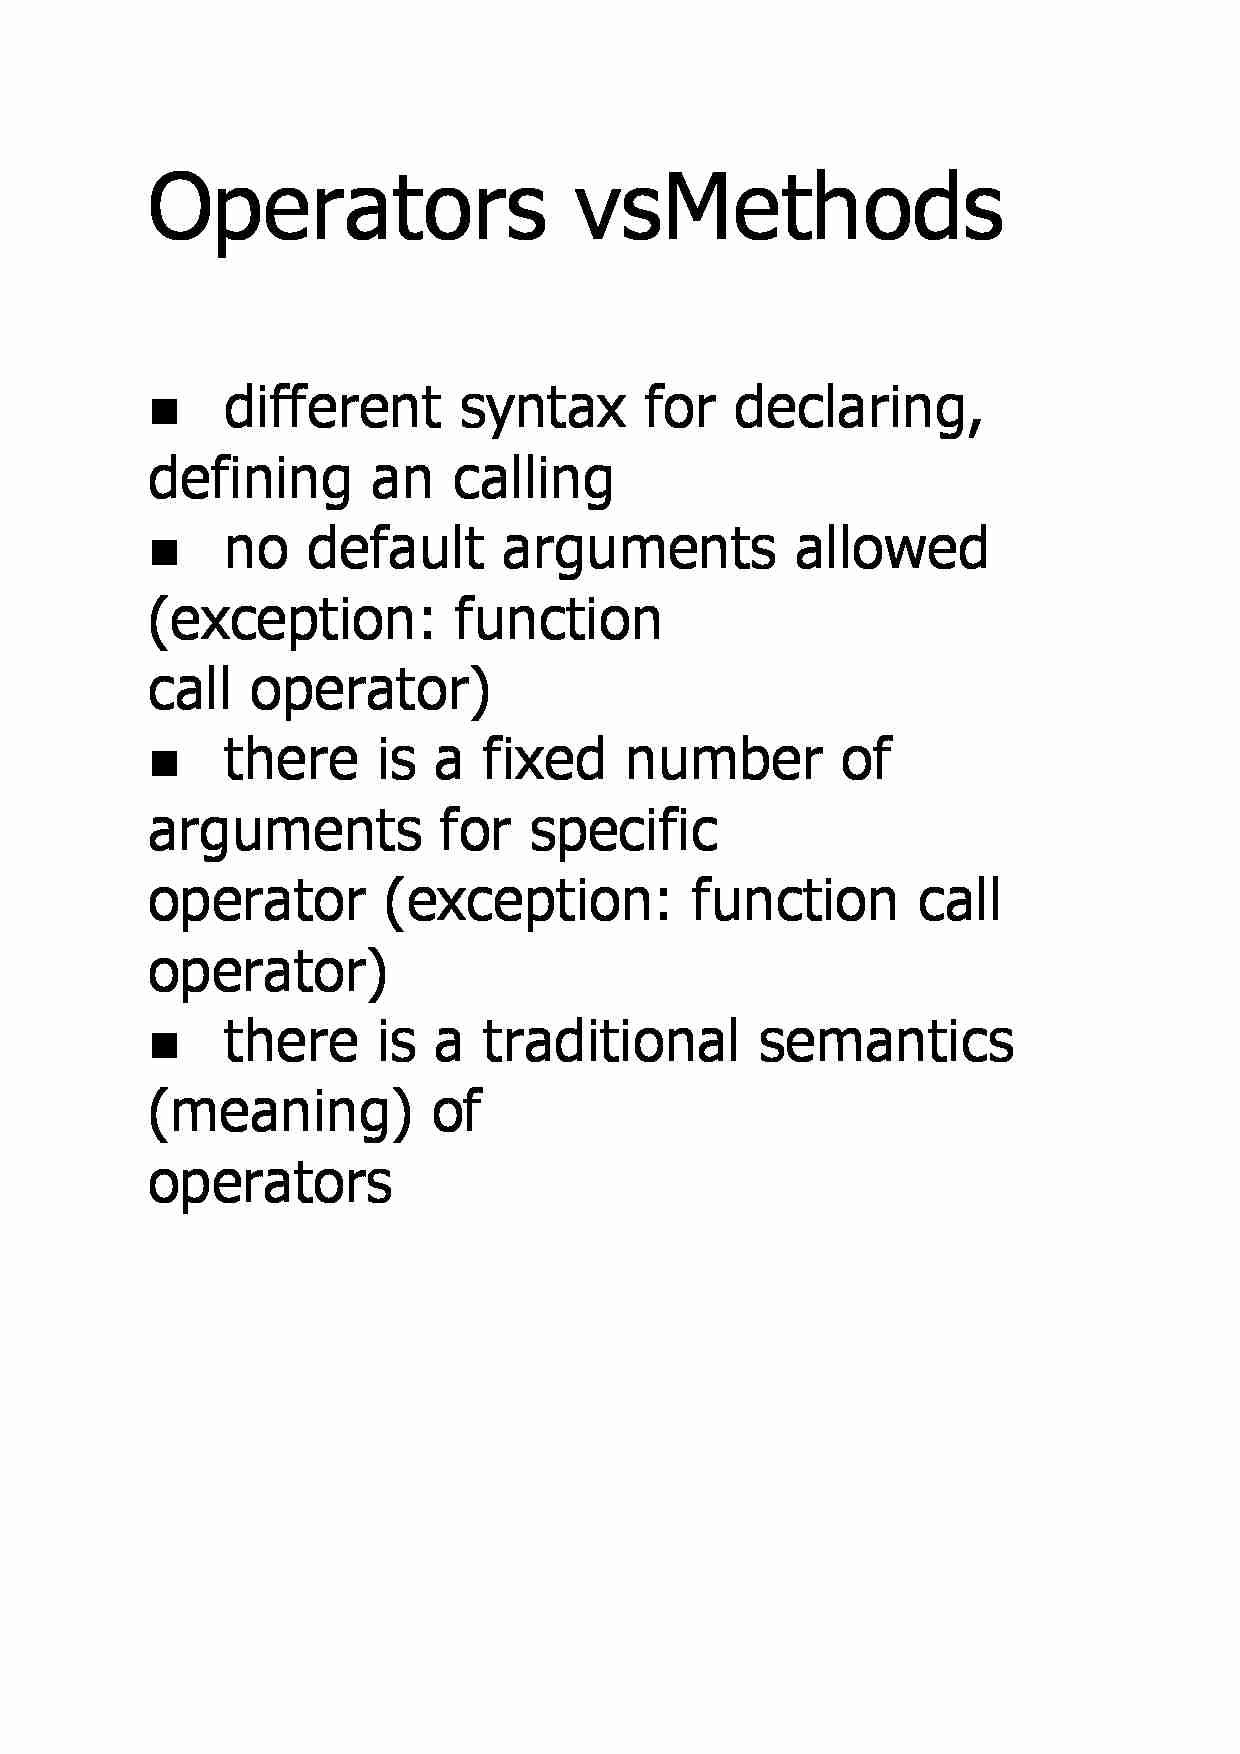 Operators vs Methods - strona 1